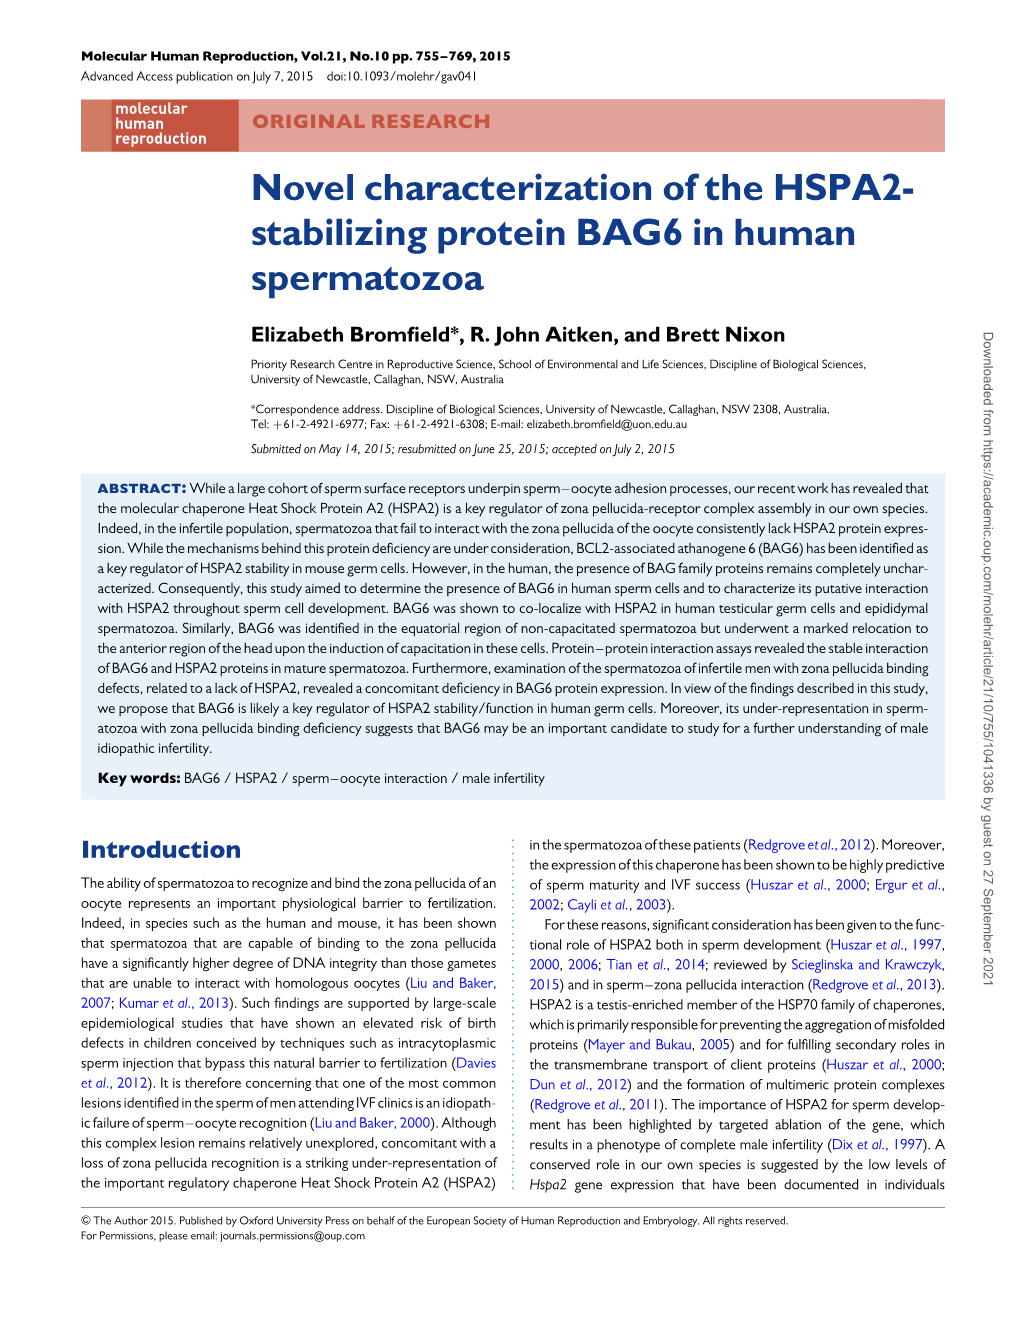 Novel Characterization of the HSPA2- Stabilizing Protein BAG6 in Human Spermatozoa